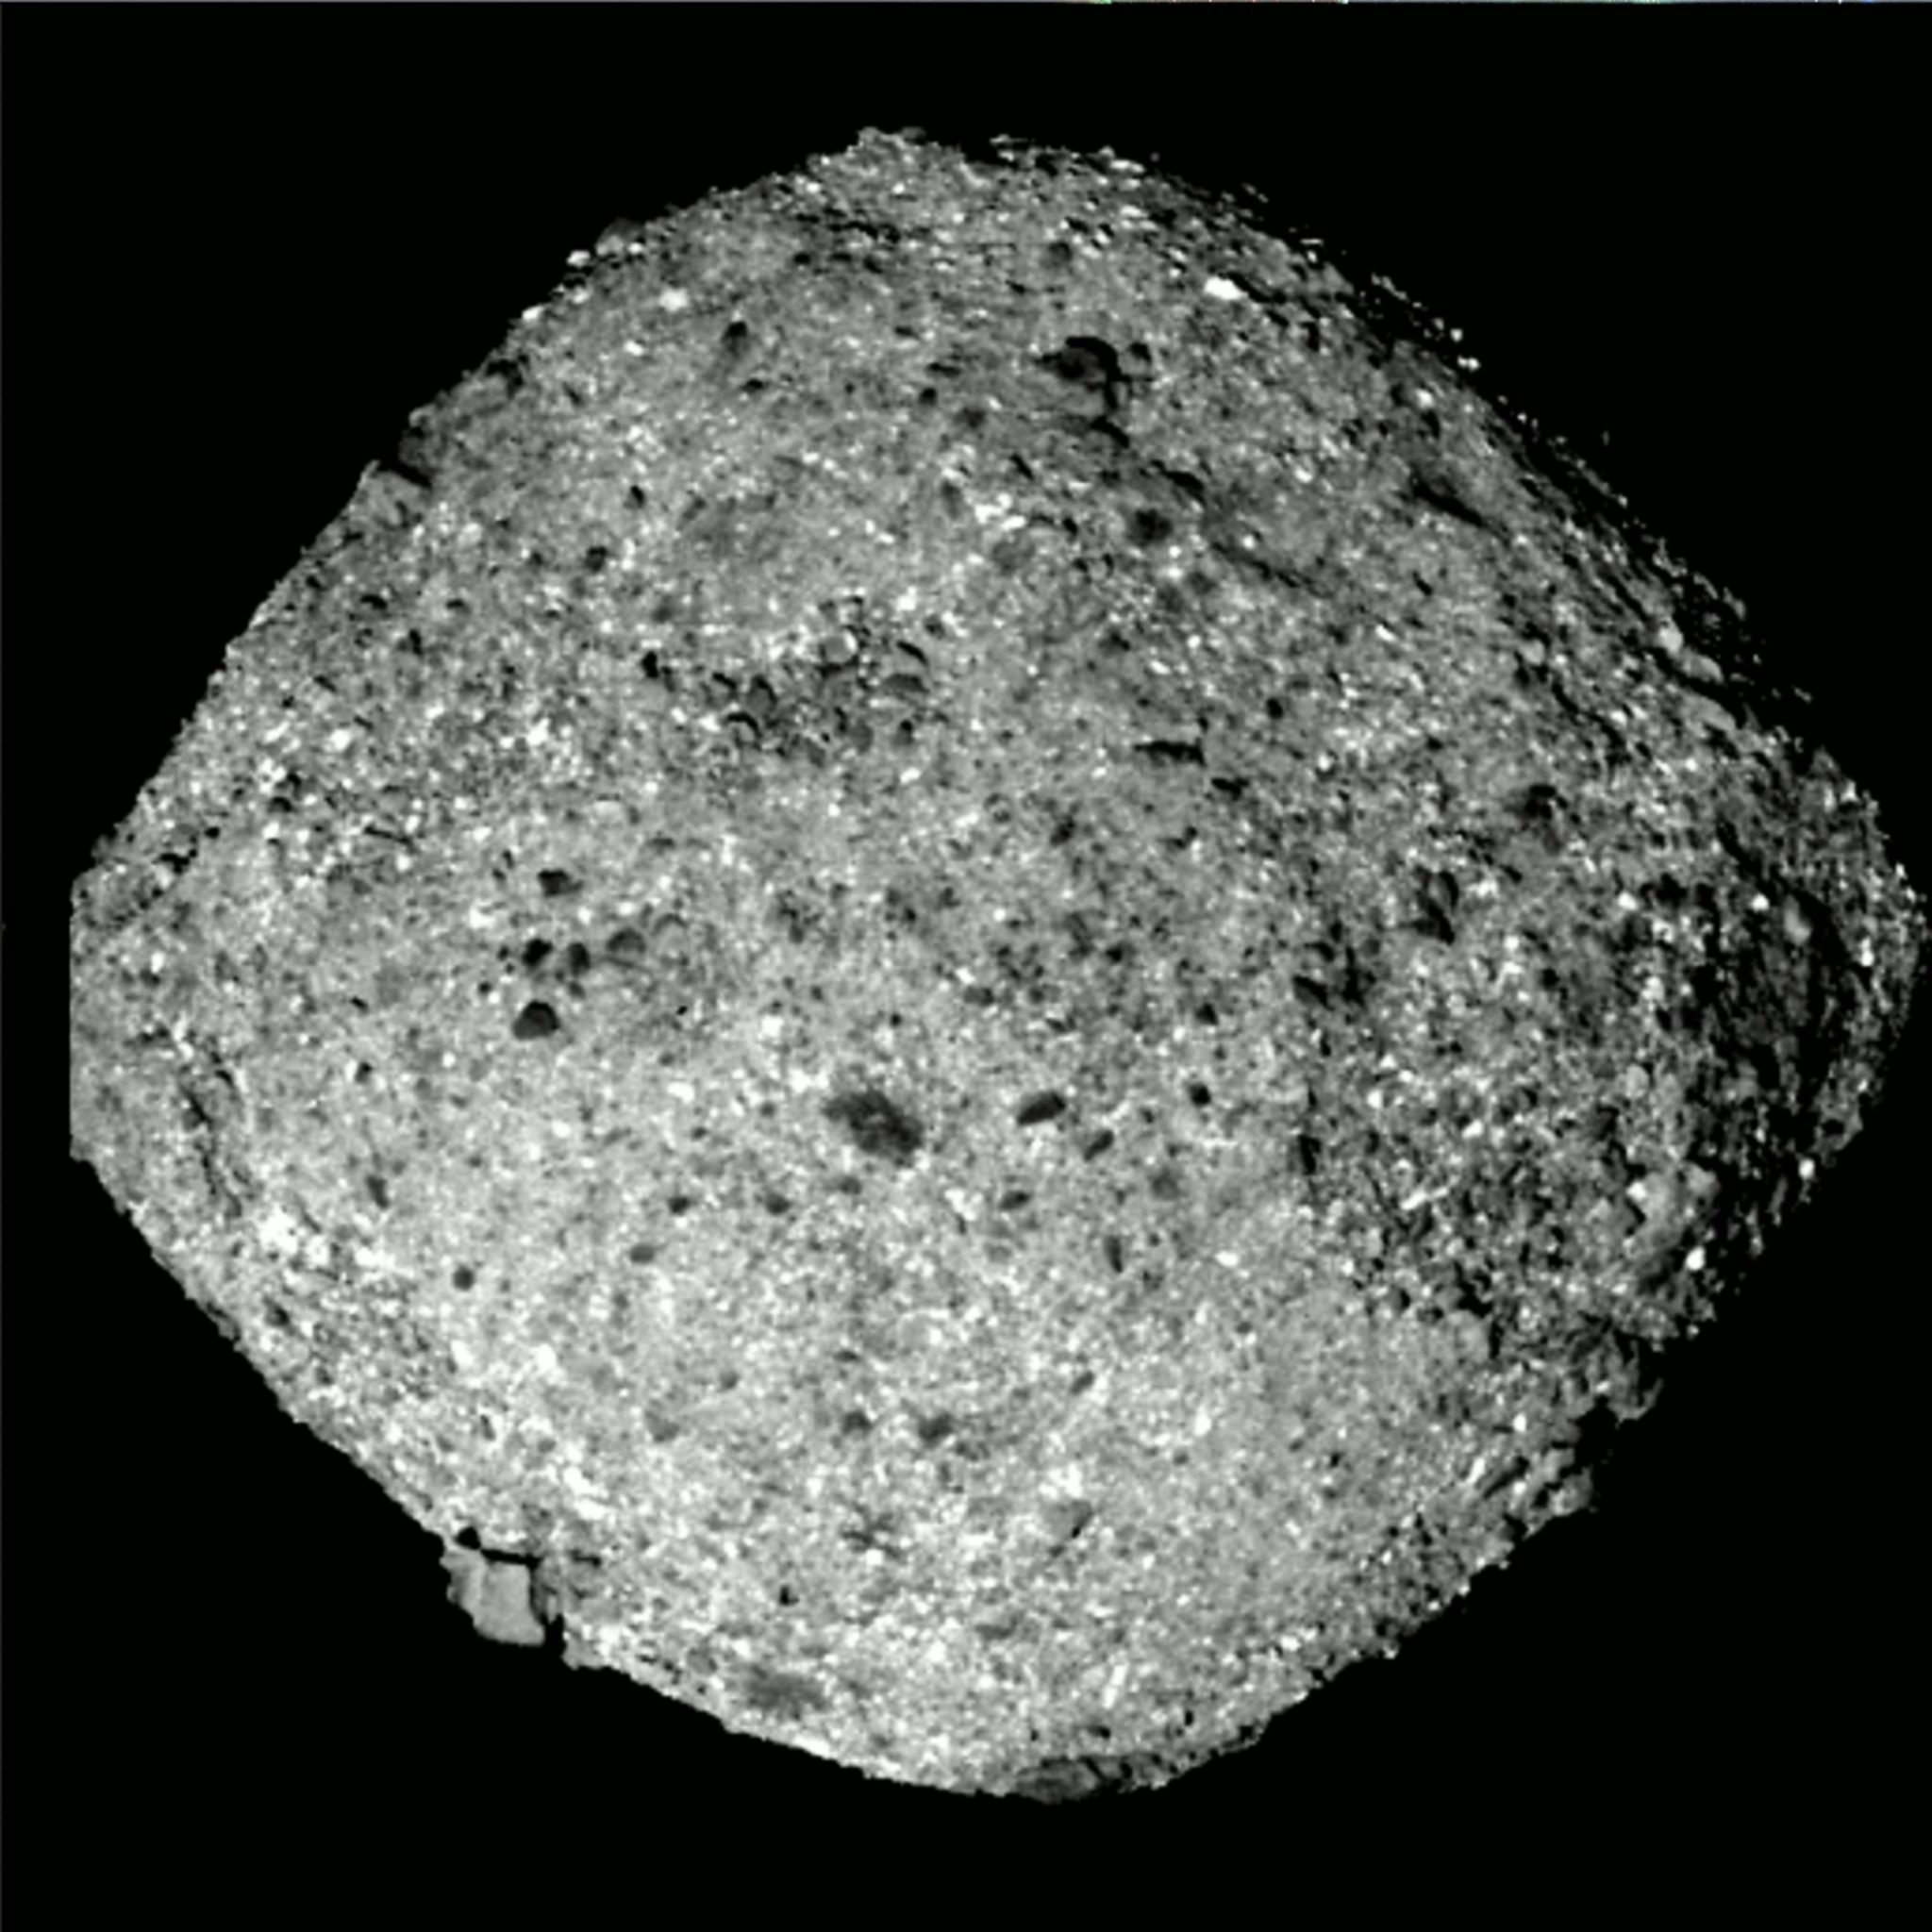 OSIRIS-REx entra en la órbita del asteroide Bennu